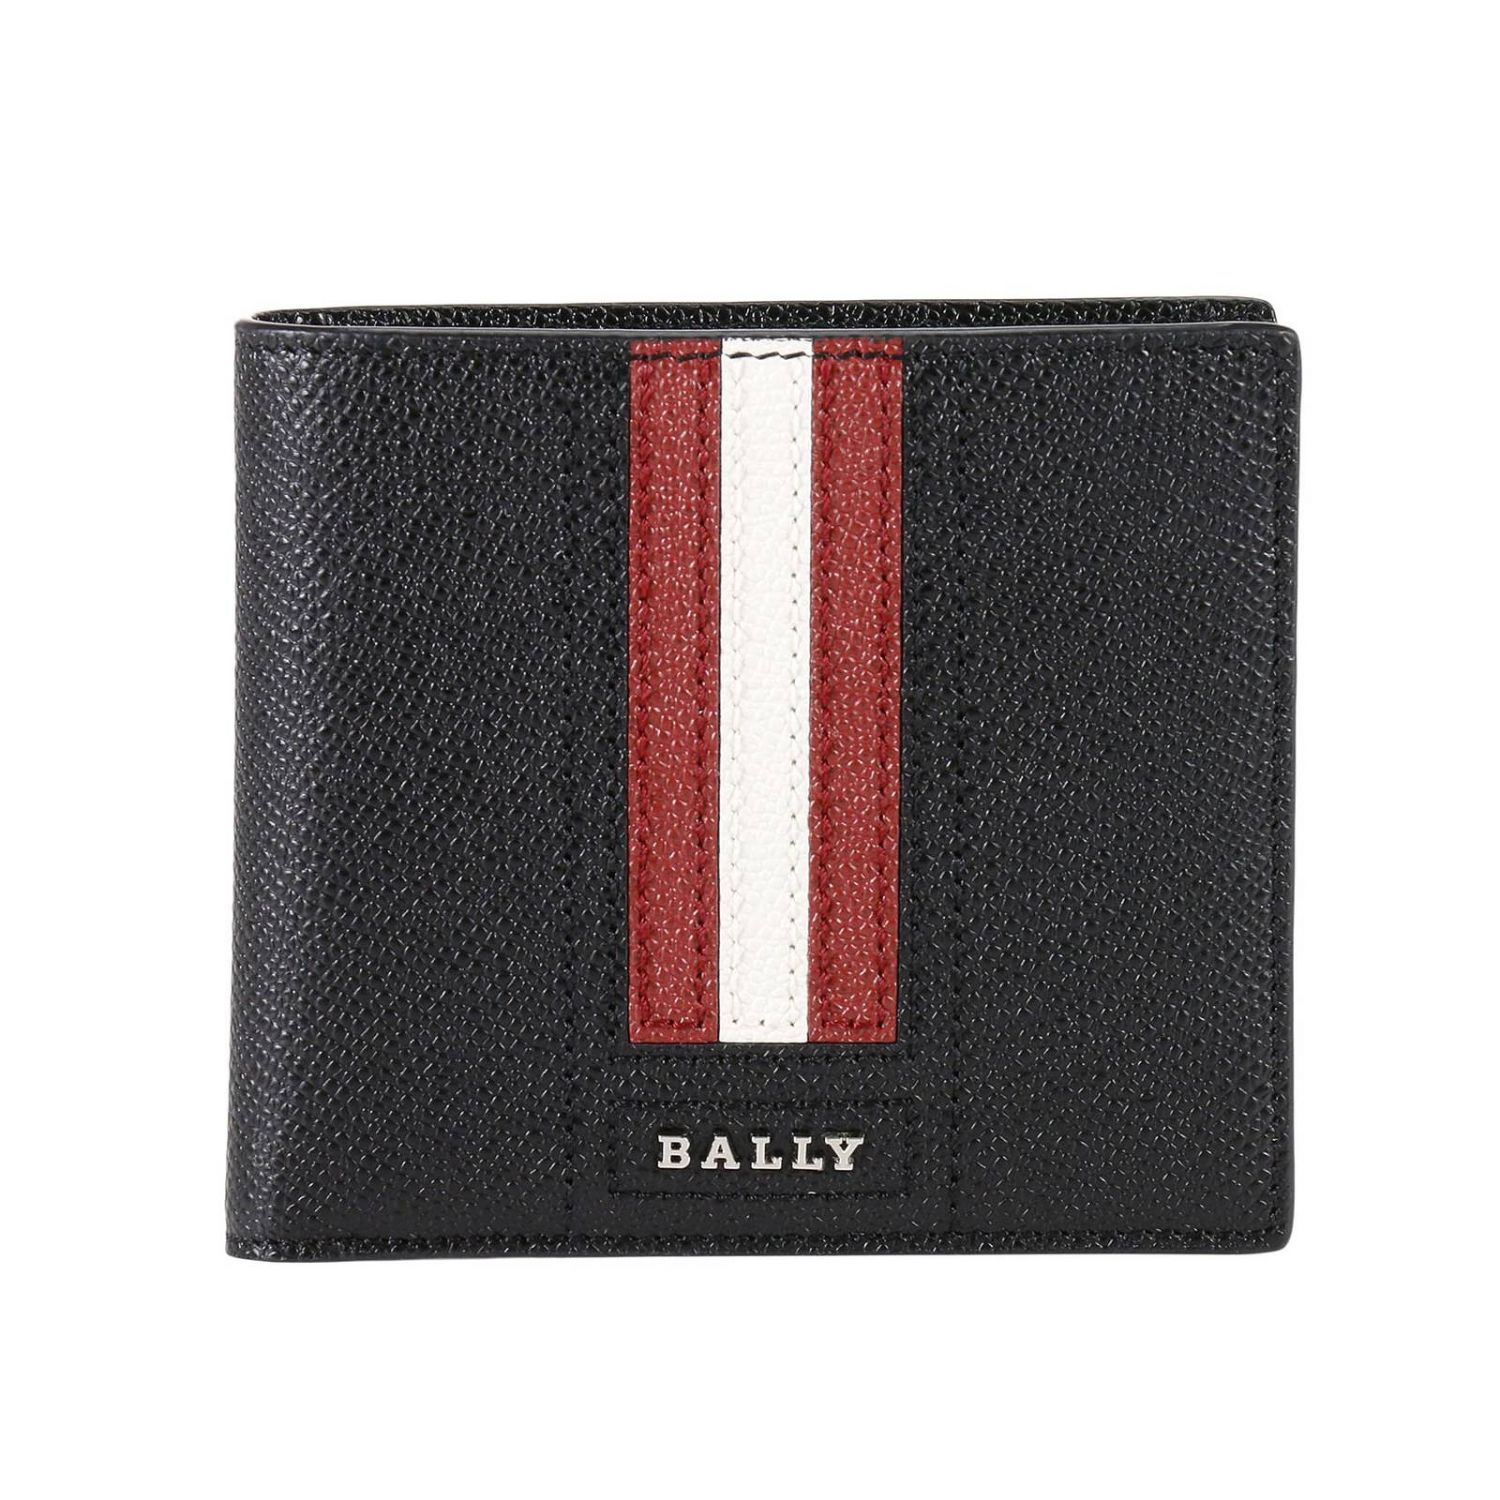 Wallet men Bally | Wallet Bally Men Black | Wallet Bally TRASAI.LT